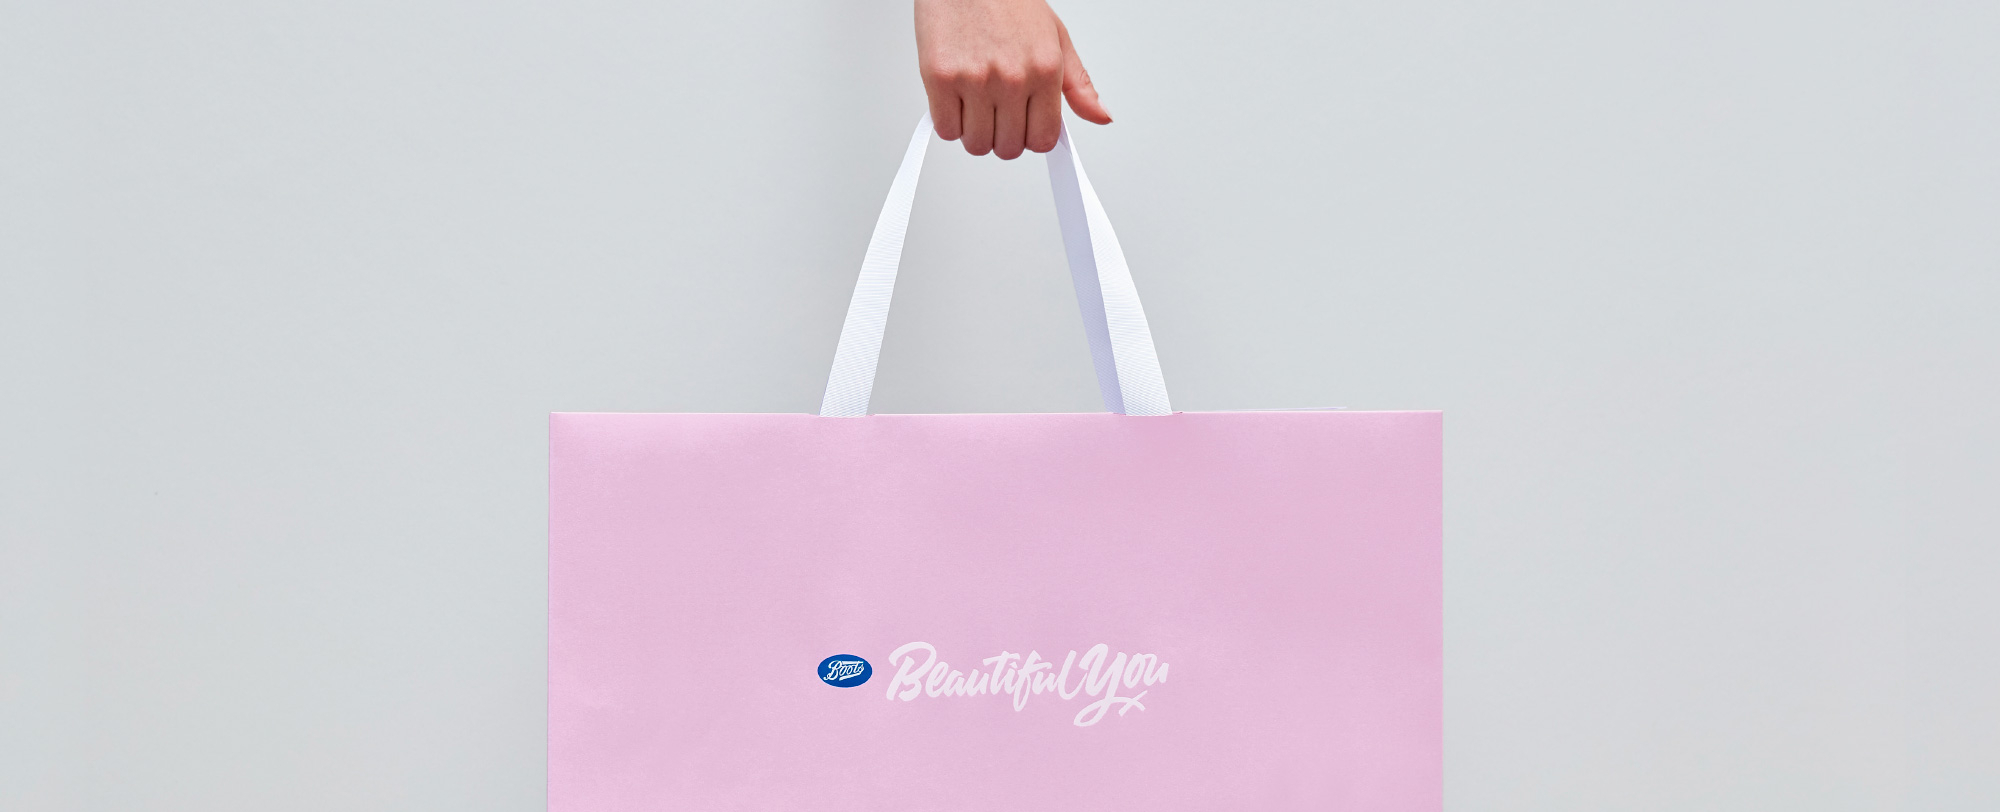 Beautiful-You-Website-Banner